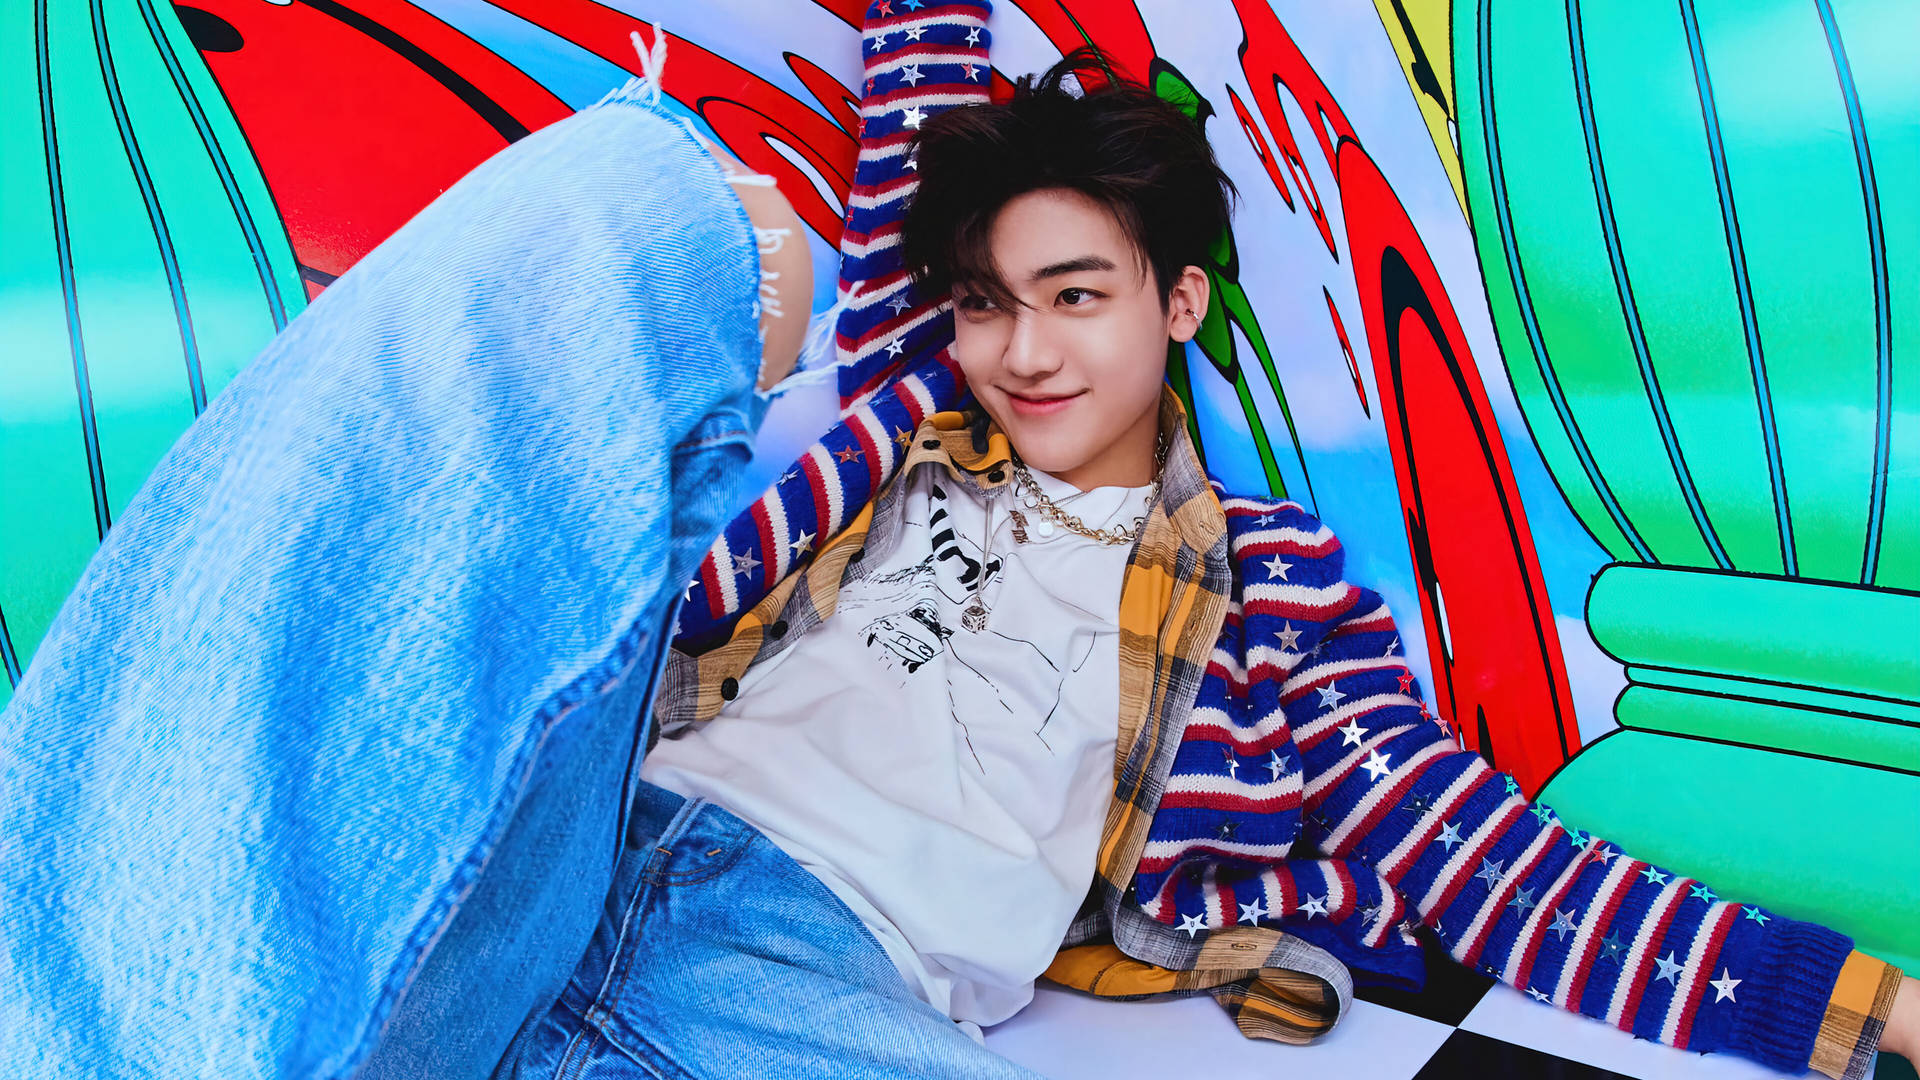 Jaemin Nct In Striped Sweater